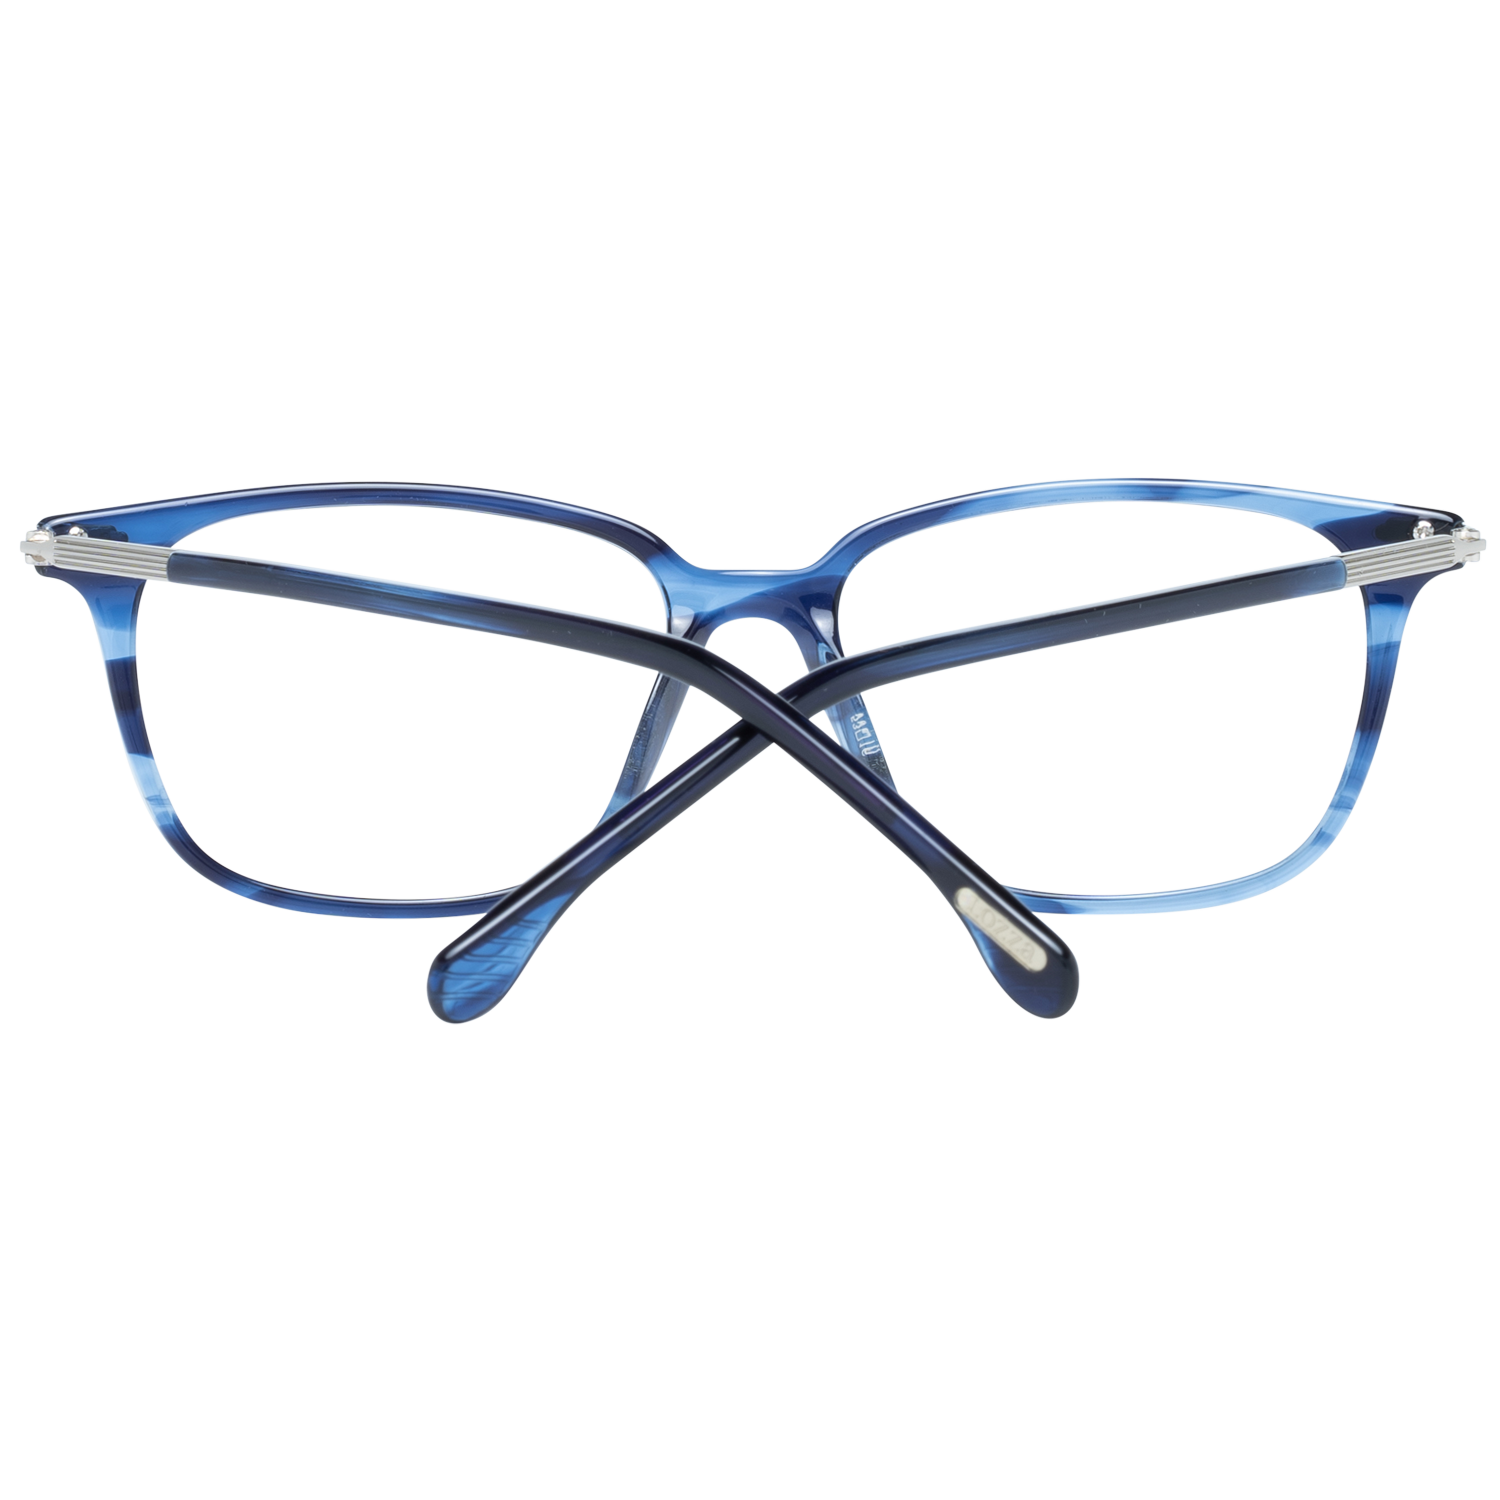 Lozza Frames Lozza Optical Frame VL4089 06X8 53 Eyeglasses Eyewear UK USA Australia 